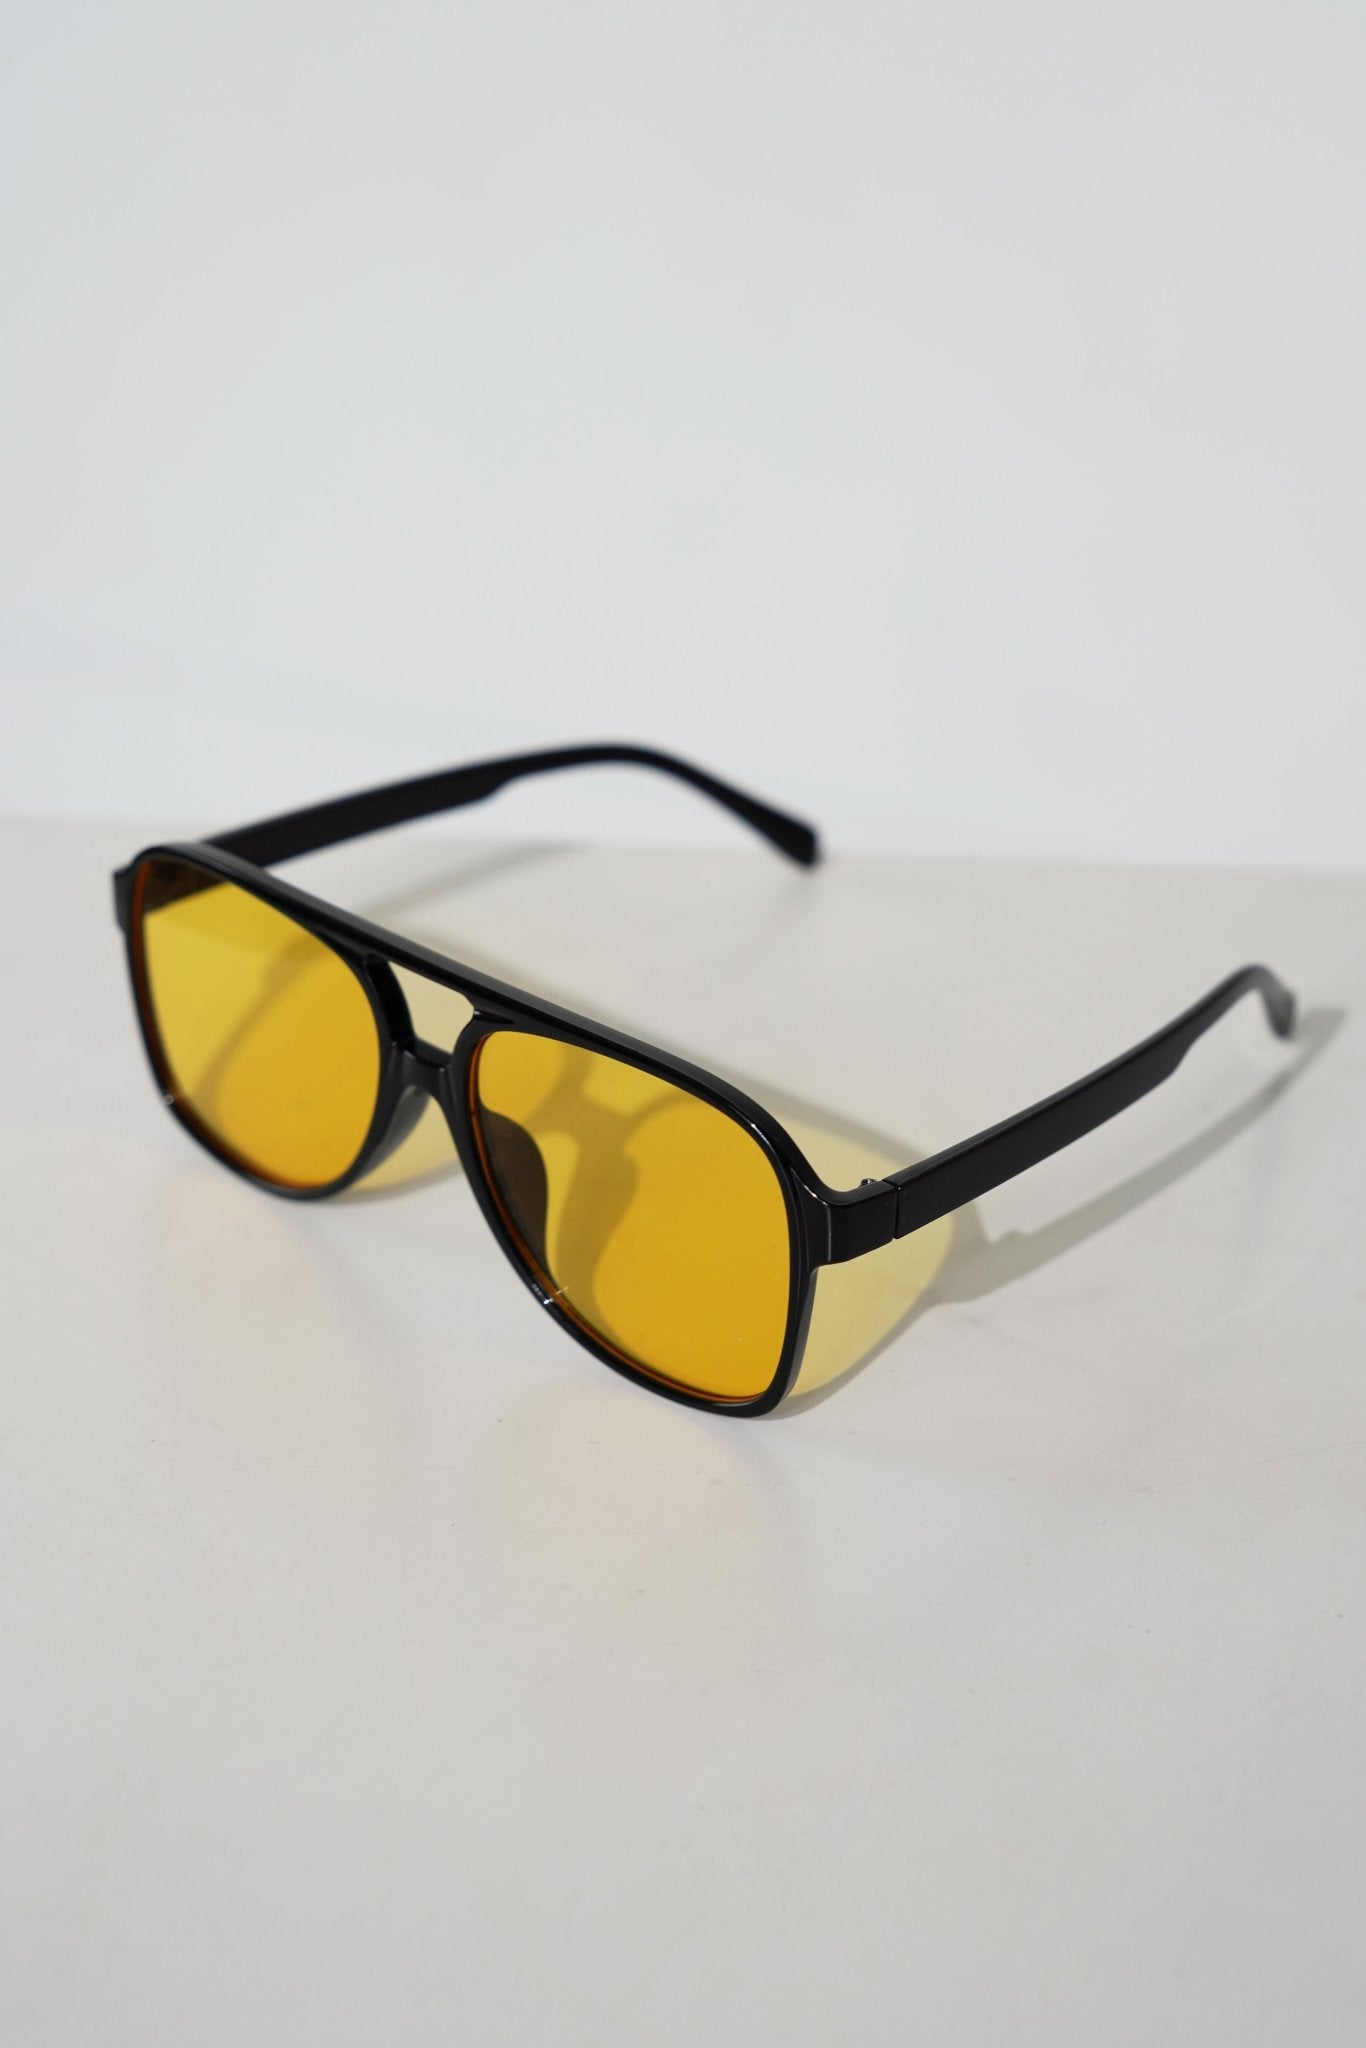 Oversized Yellow Tint Retro Black Framed Sunglasses - TB-BondMenSunglasses